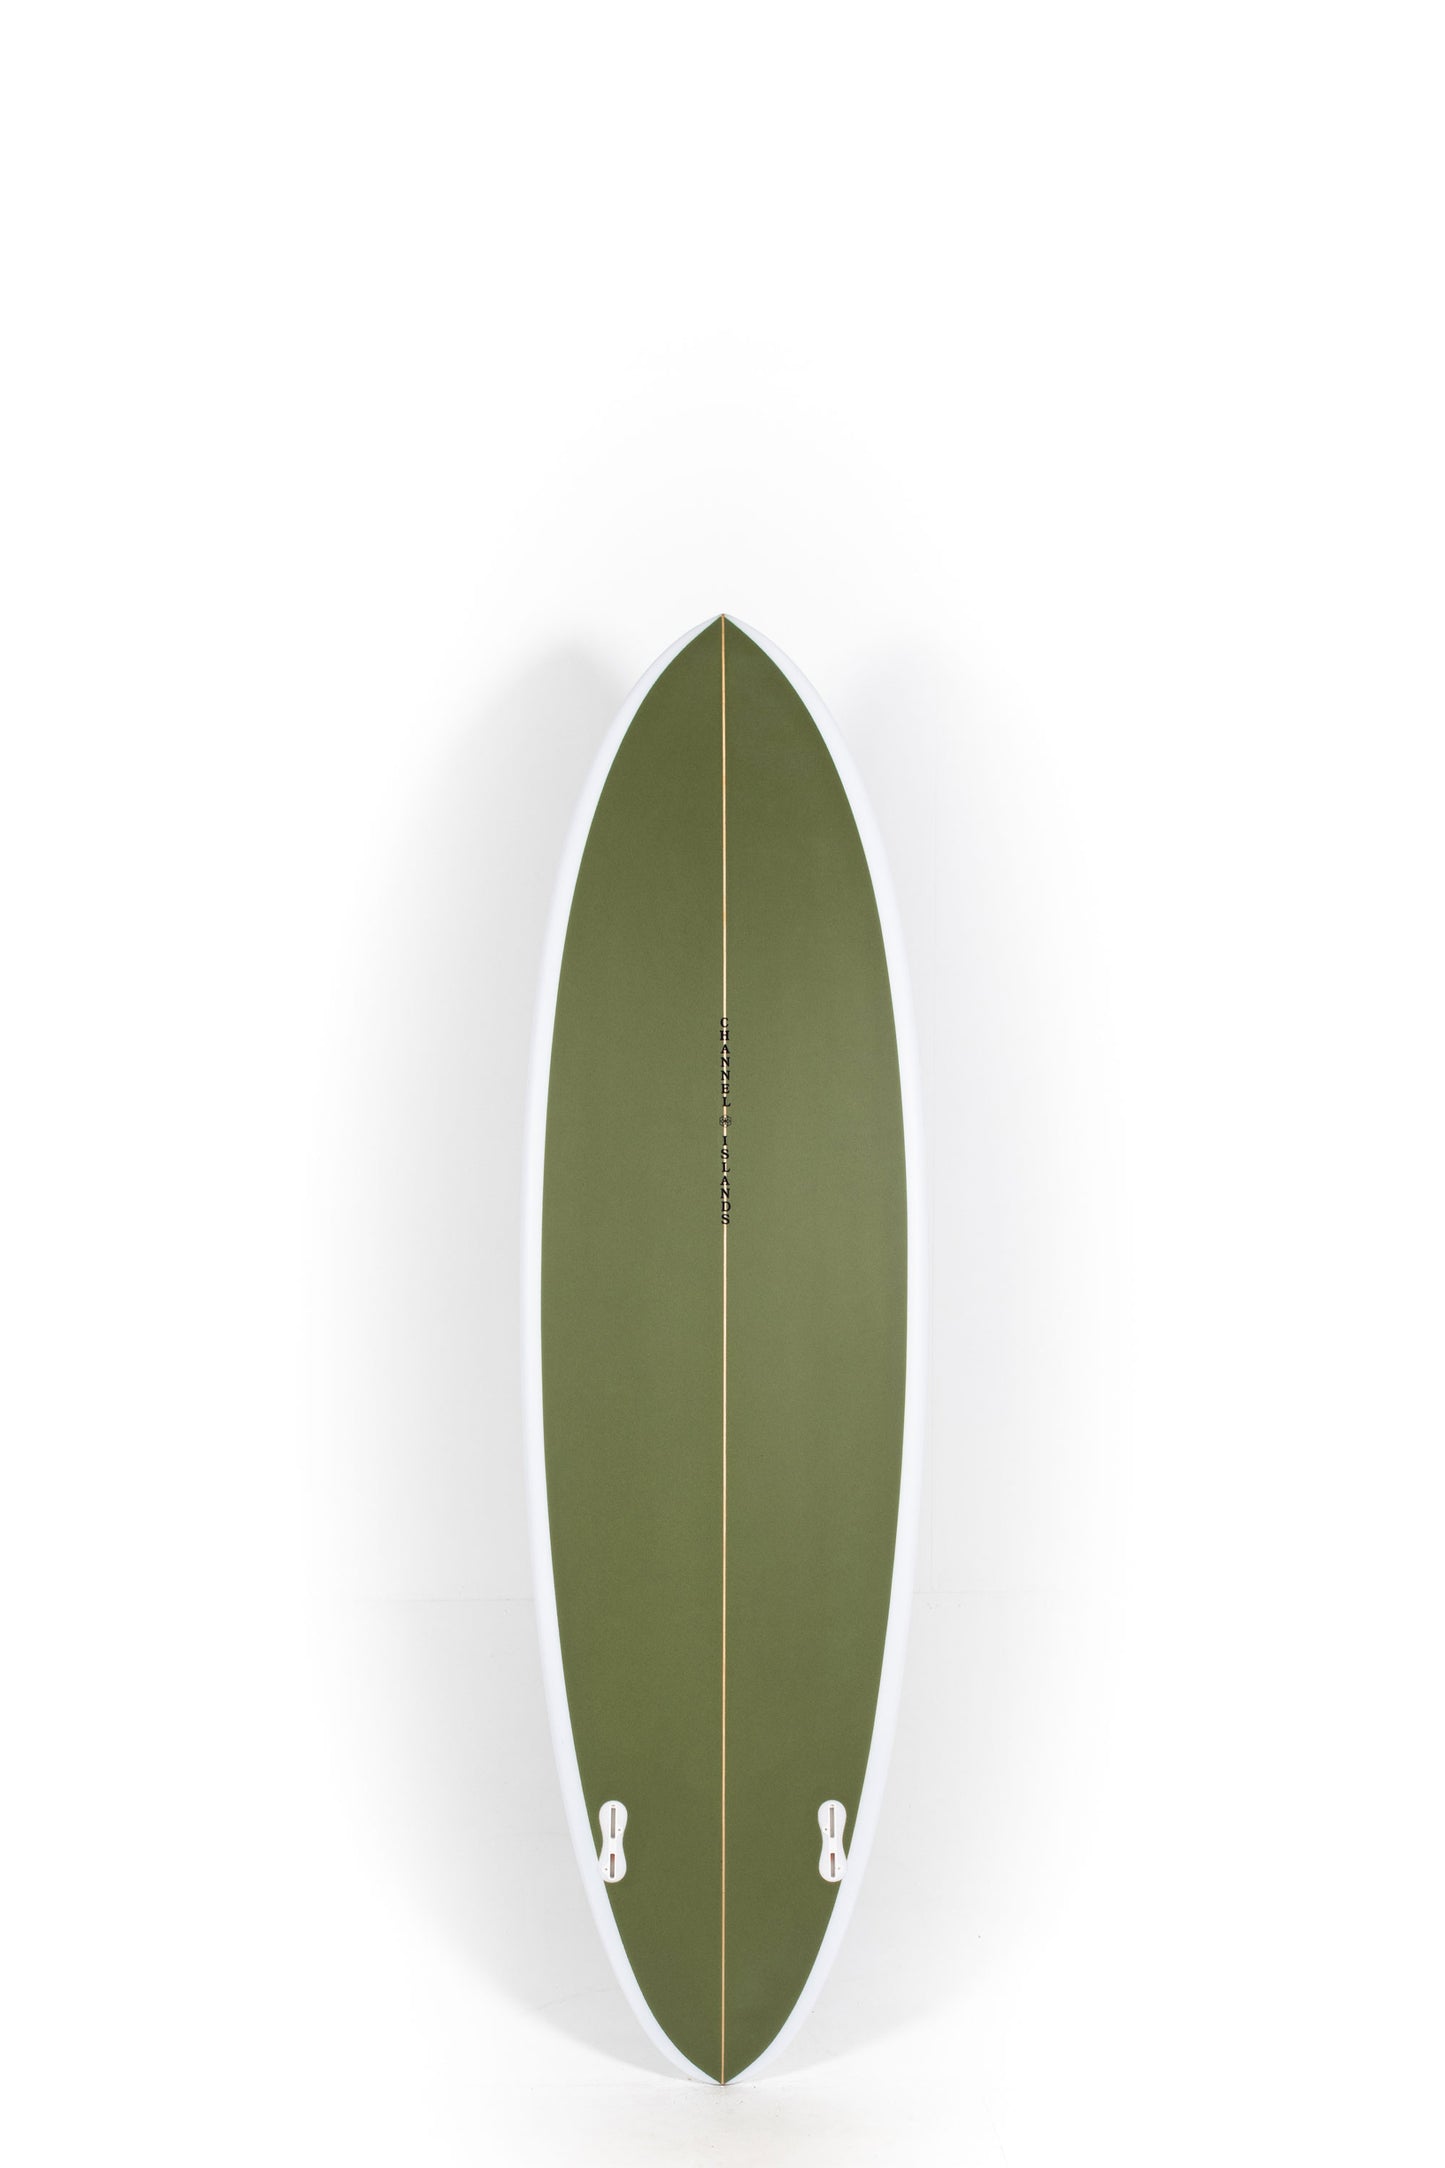 Pukas Surf Shop - Channel Islands - CI MID TWIN - 6'4" x 20 3/4 x 2 5/8 - 38L - CI27977